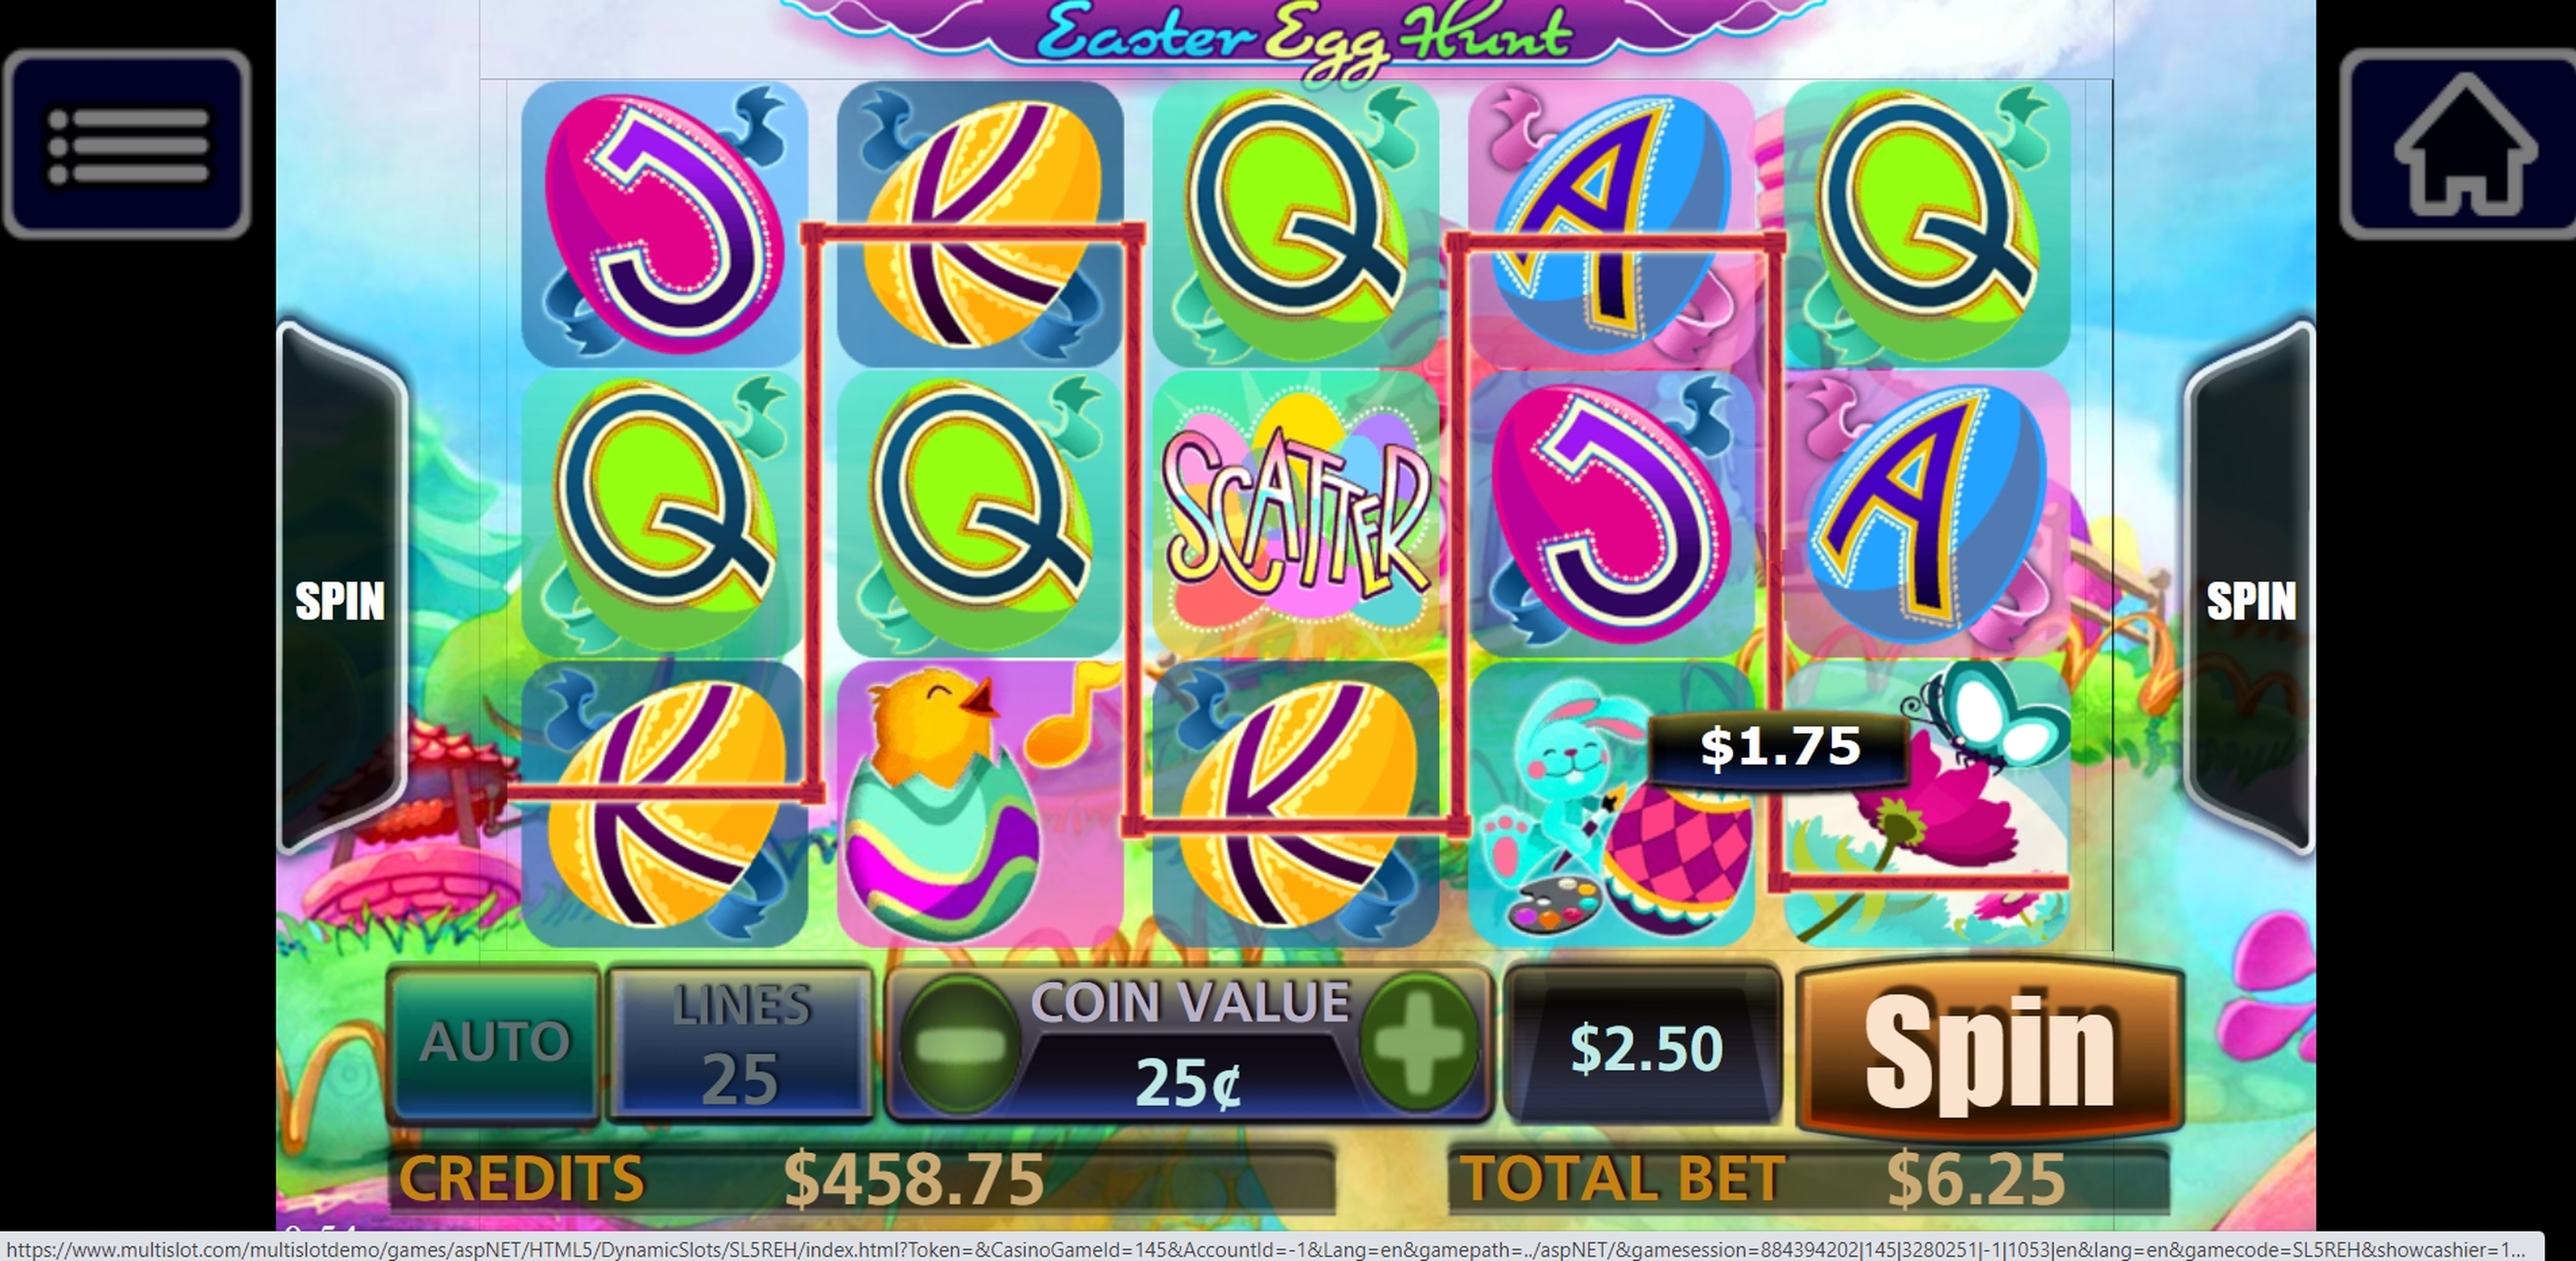 Win Money in Easter Egg Hunt Free Slot Game by Multislot